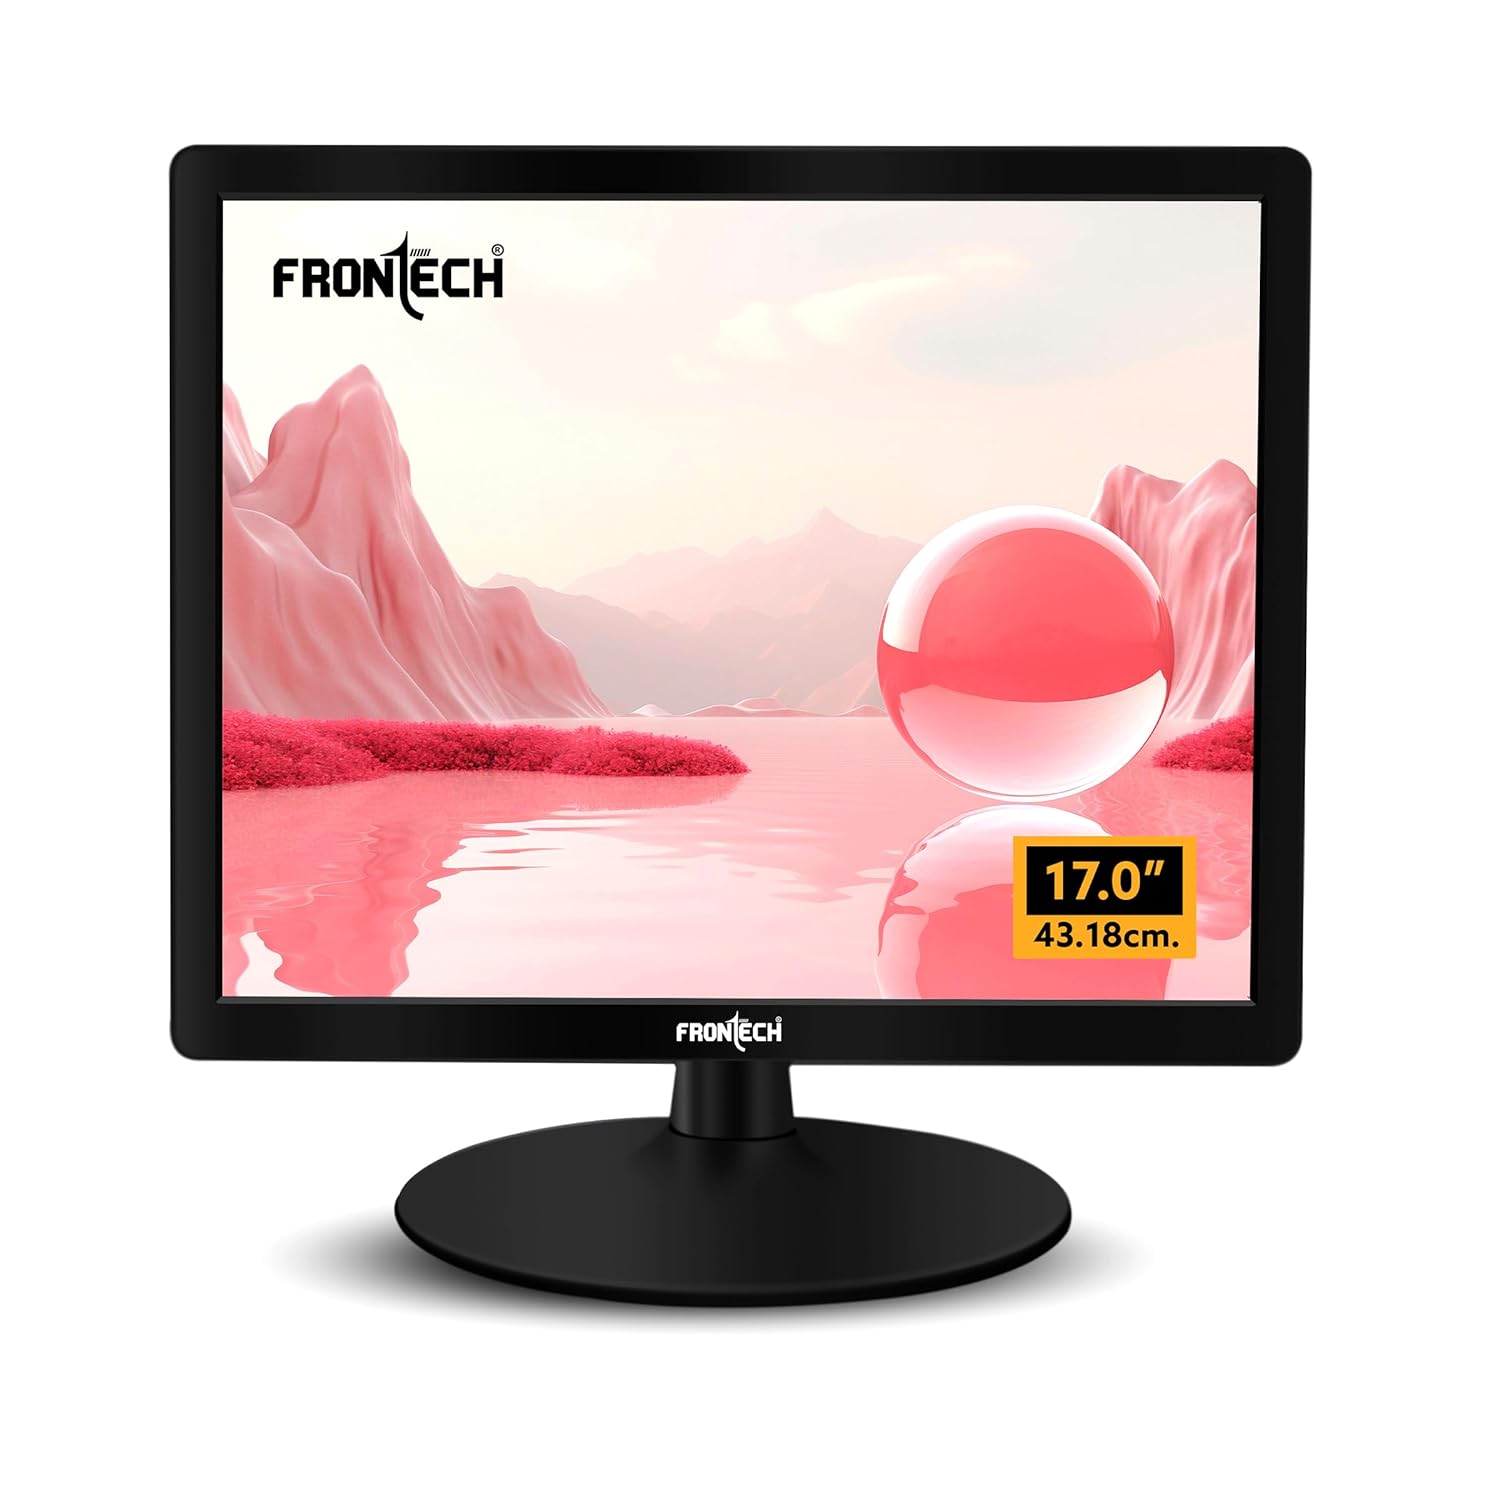 FRONTECH 17 LED Monitor 75Hz Refresh Rate | 1028x1024p, 16.7M Colors, Mountable | HDMI/VGA Ports - Mon-0065 (43.18cm)